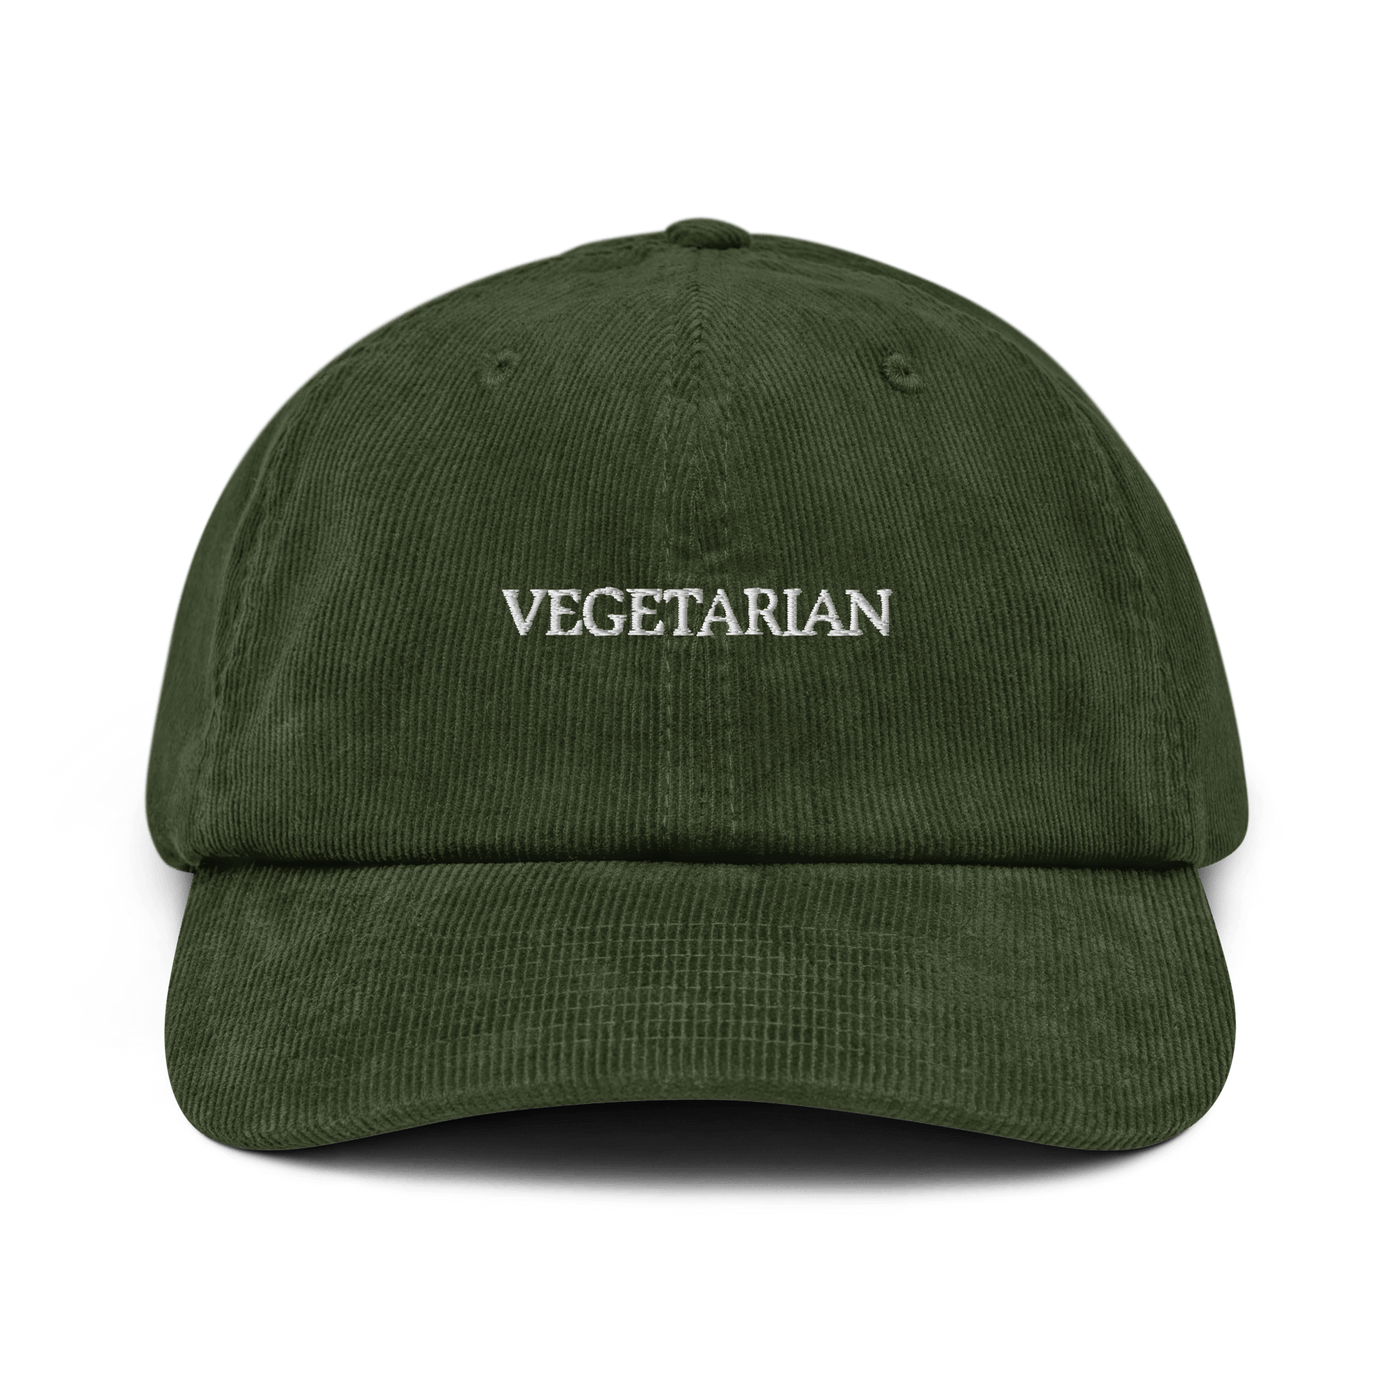 Vegetarian Corduroy hat - Dark Olive - - Just Another Cap Store